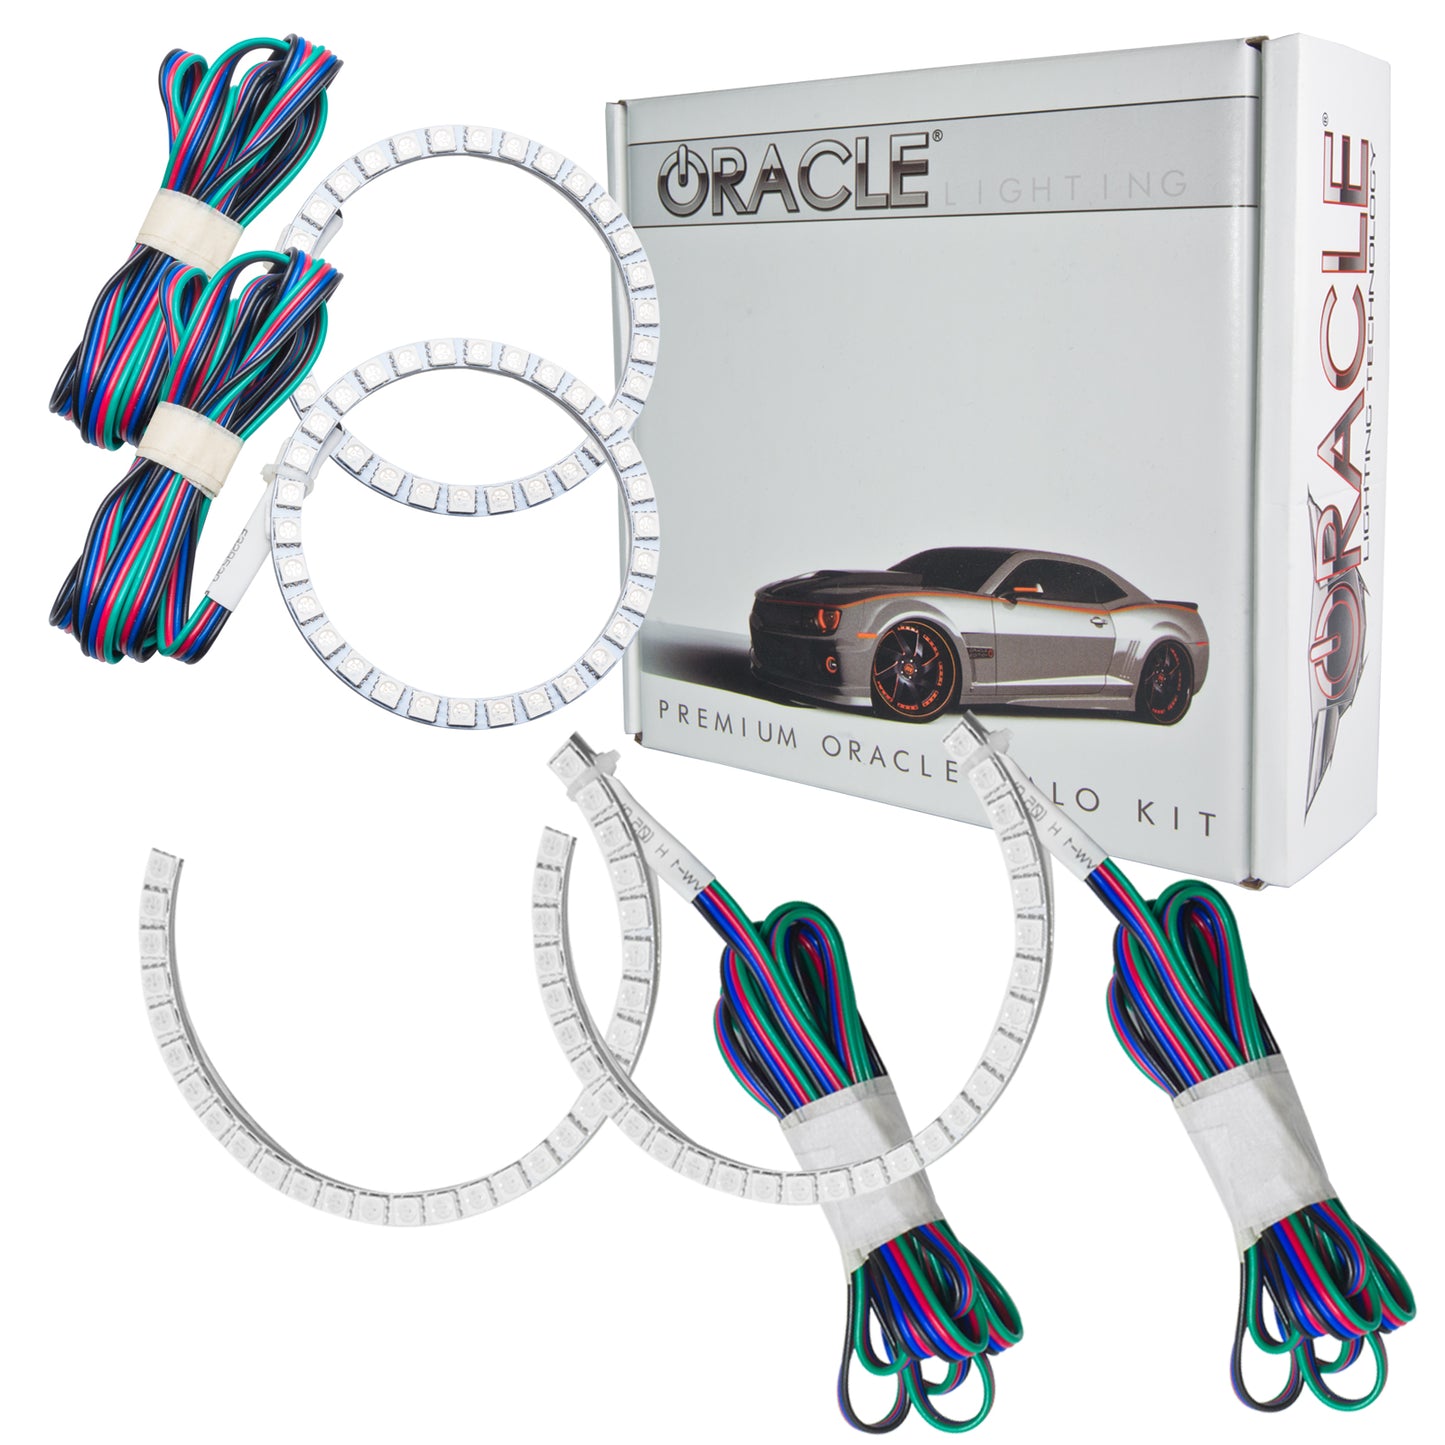 Oracle Lighting 2663-333 - Jaguar XF 2008-2010 ORACLE ColorSHIFT Halo Kit